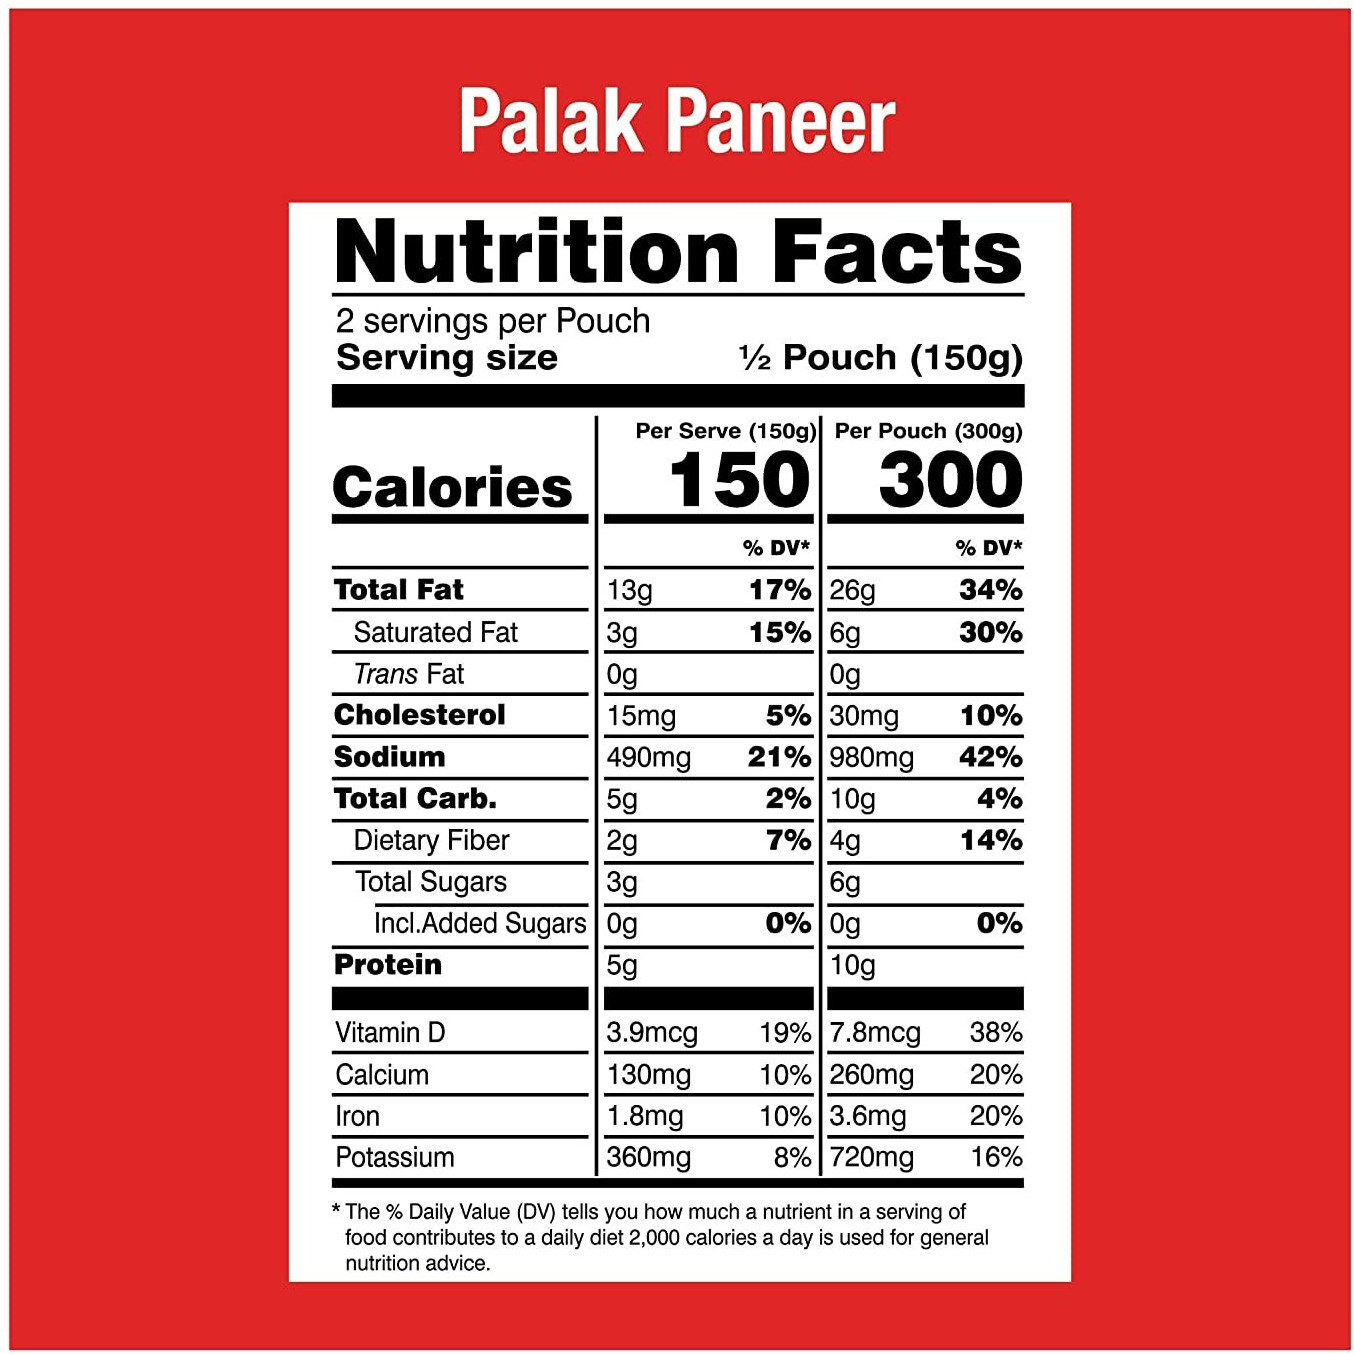 MTR Ready To Eat Palak Paneer - 300 Gm (10.5 Oz)